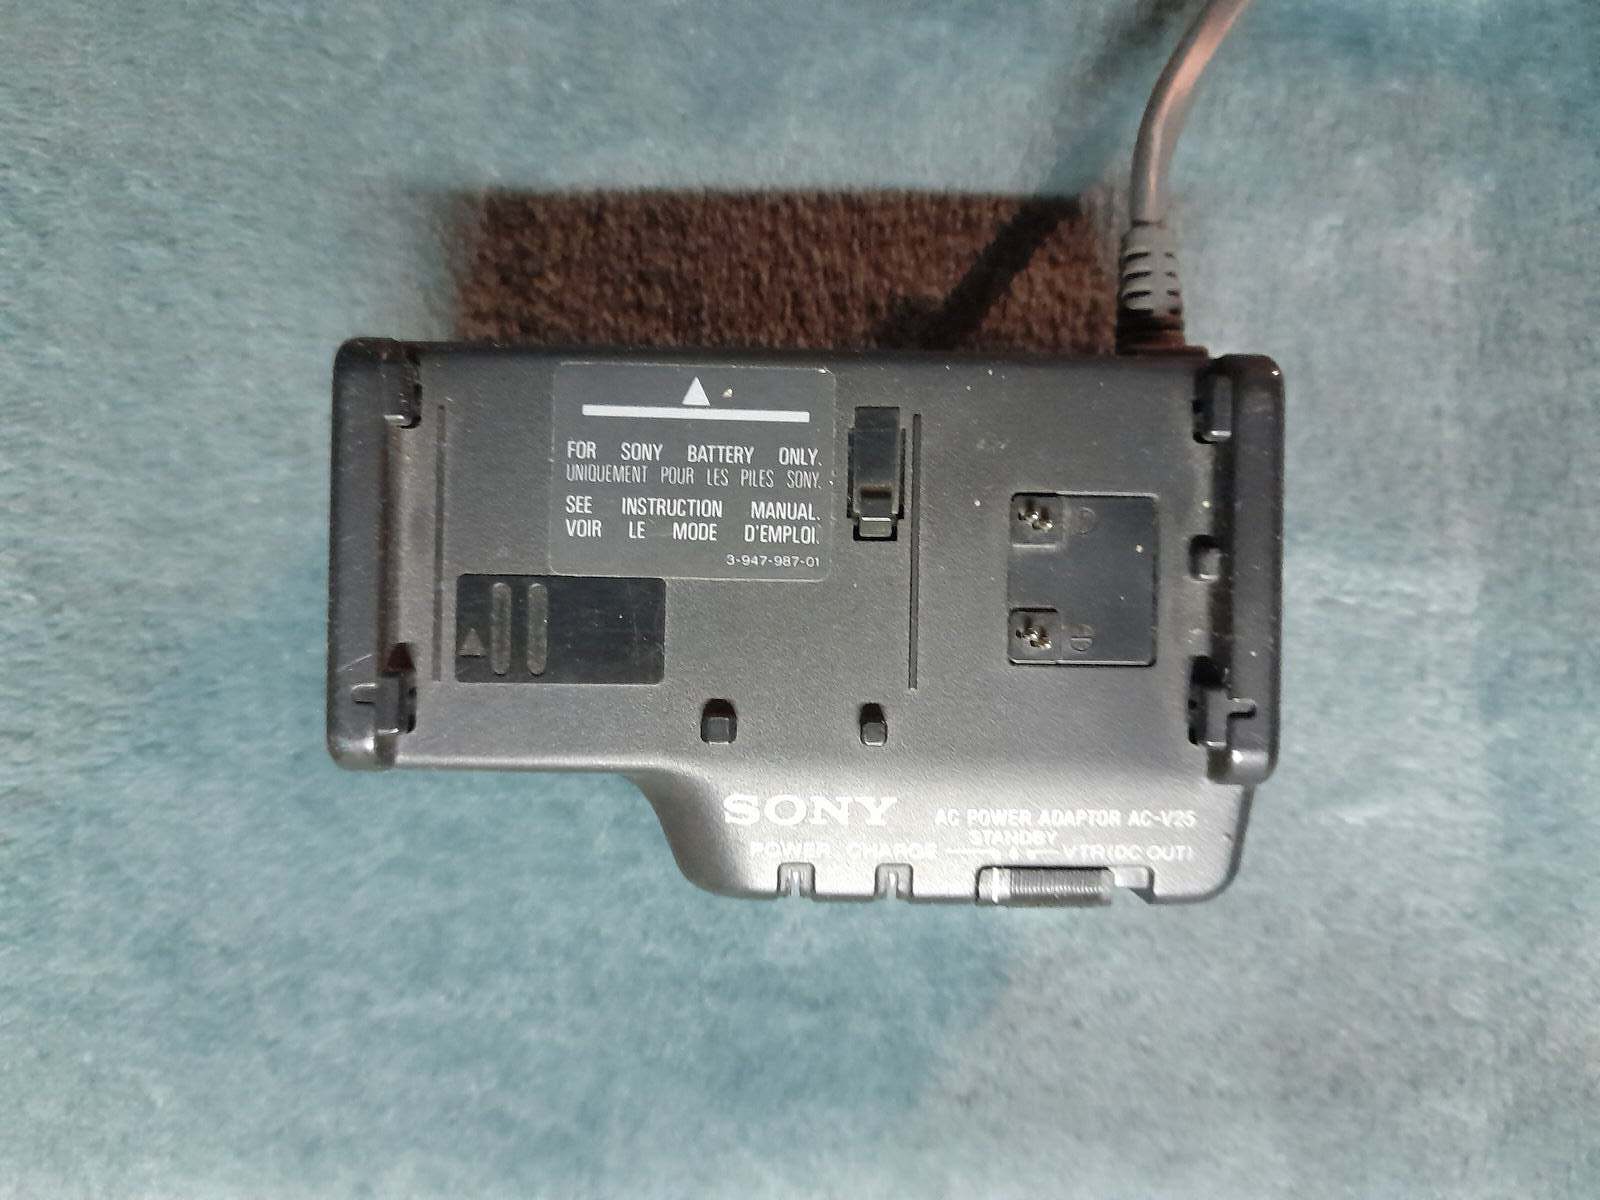 AC POWER adapter, SONY, AC-V25